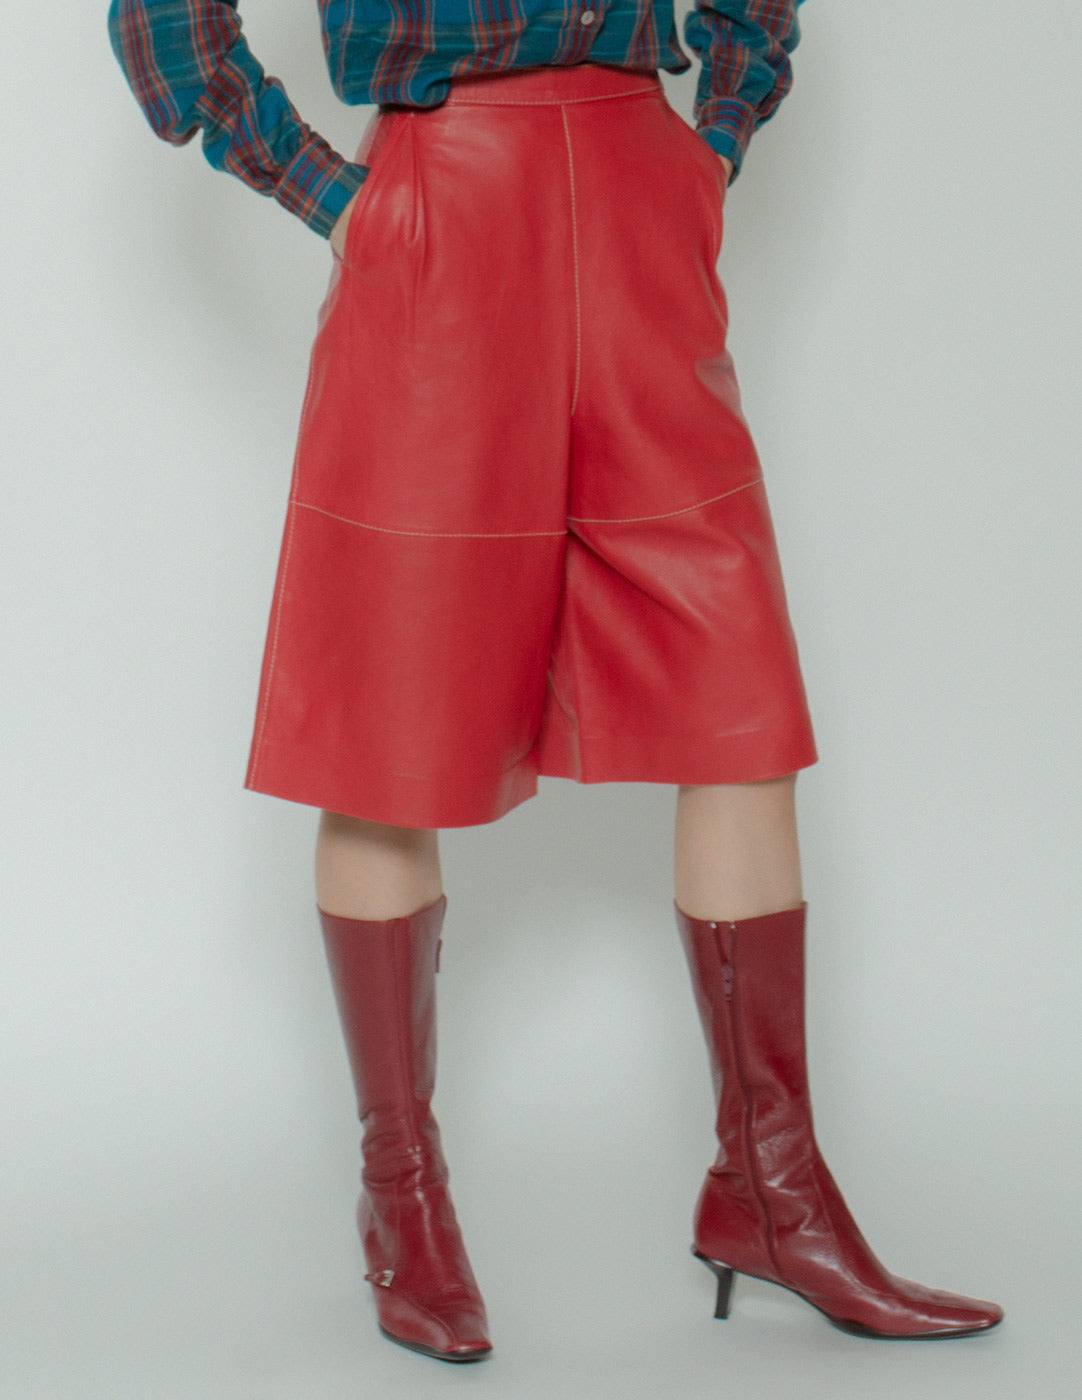 Gianfranco Ferré vintage red leather culottes detail